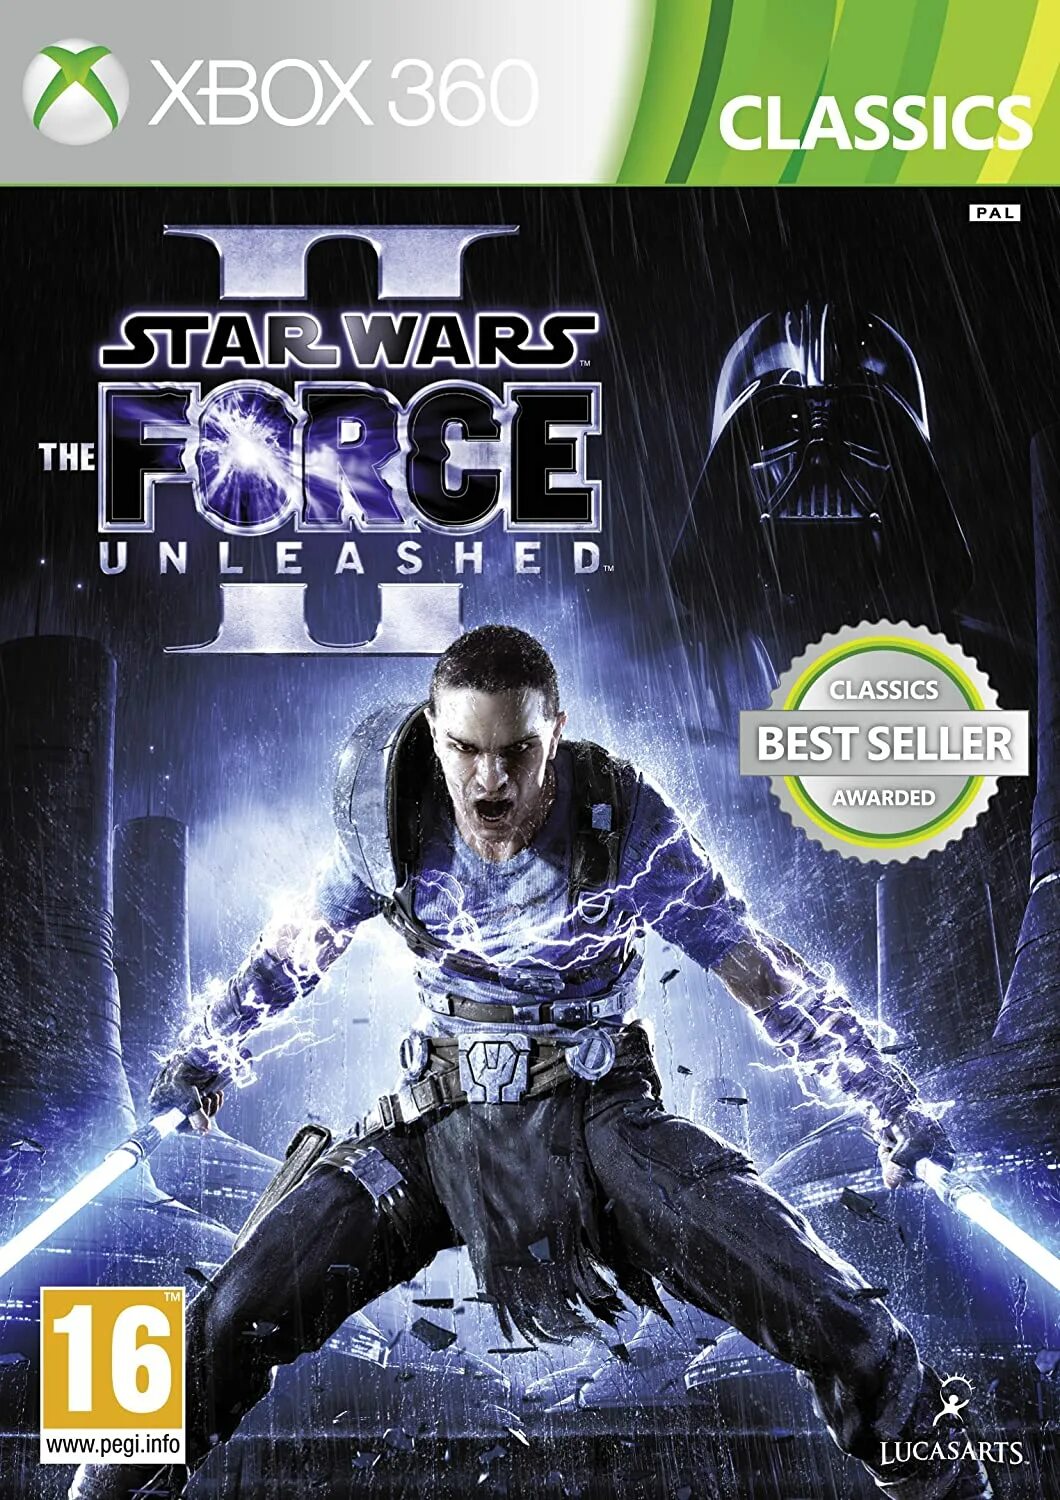 Star Wars the Force unleashed Xbox 360. Star Wars unleashed 2. Star Wars: the Force unleashed II (ps3). Star Wars the Force unleashed 2 ps3. Купить star wars xbox